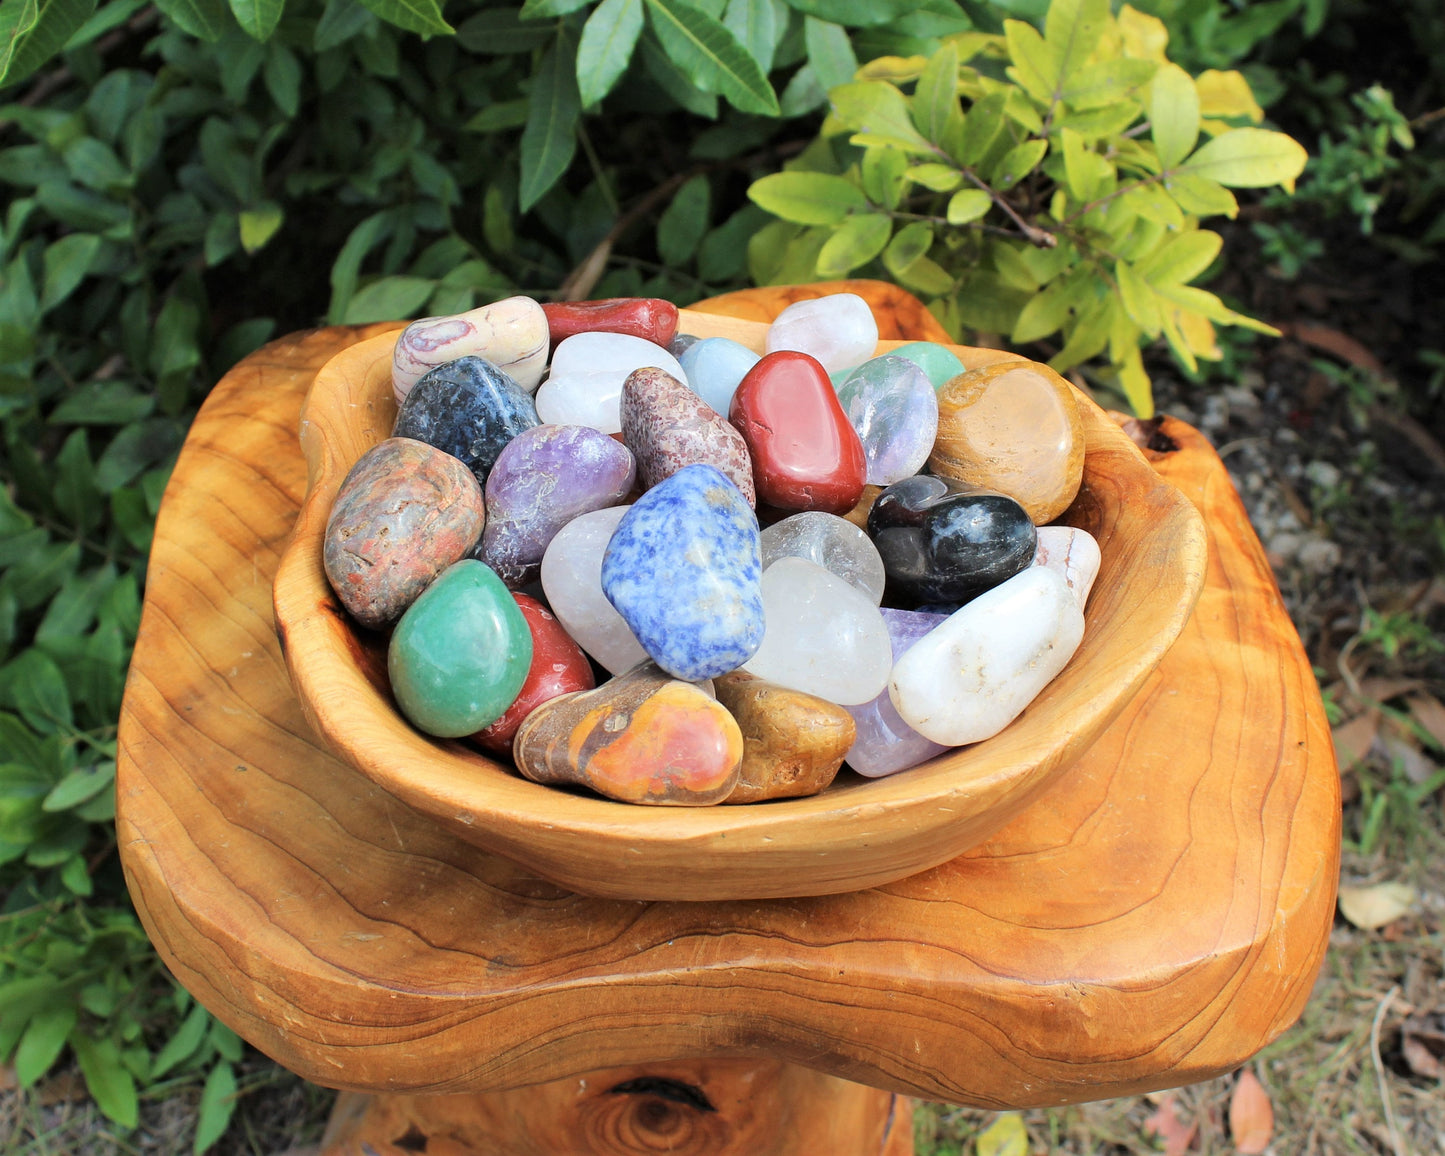 Large Assorted Mixed Tumbled Stones